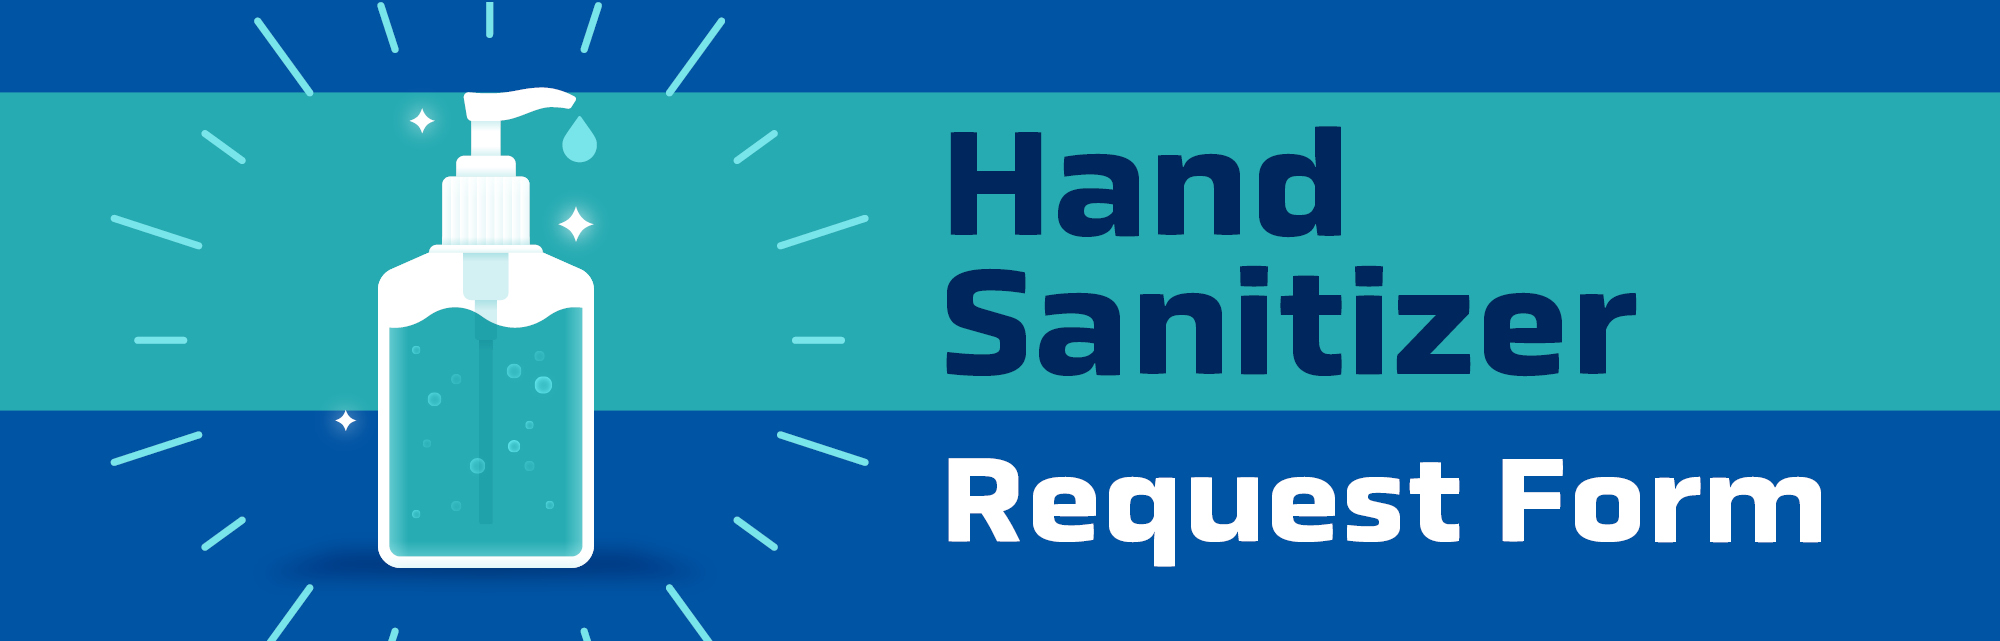 Hand Sanitizer Request Form